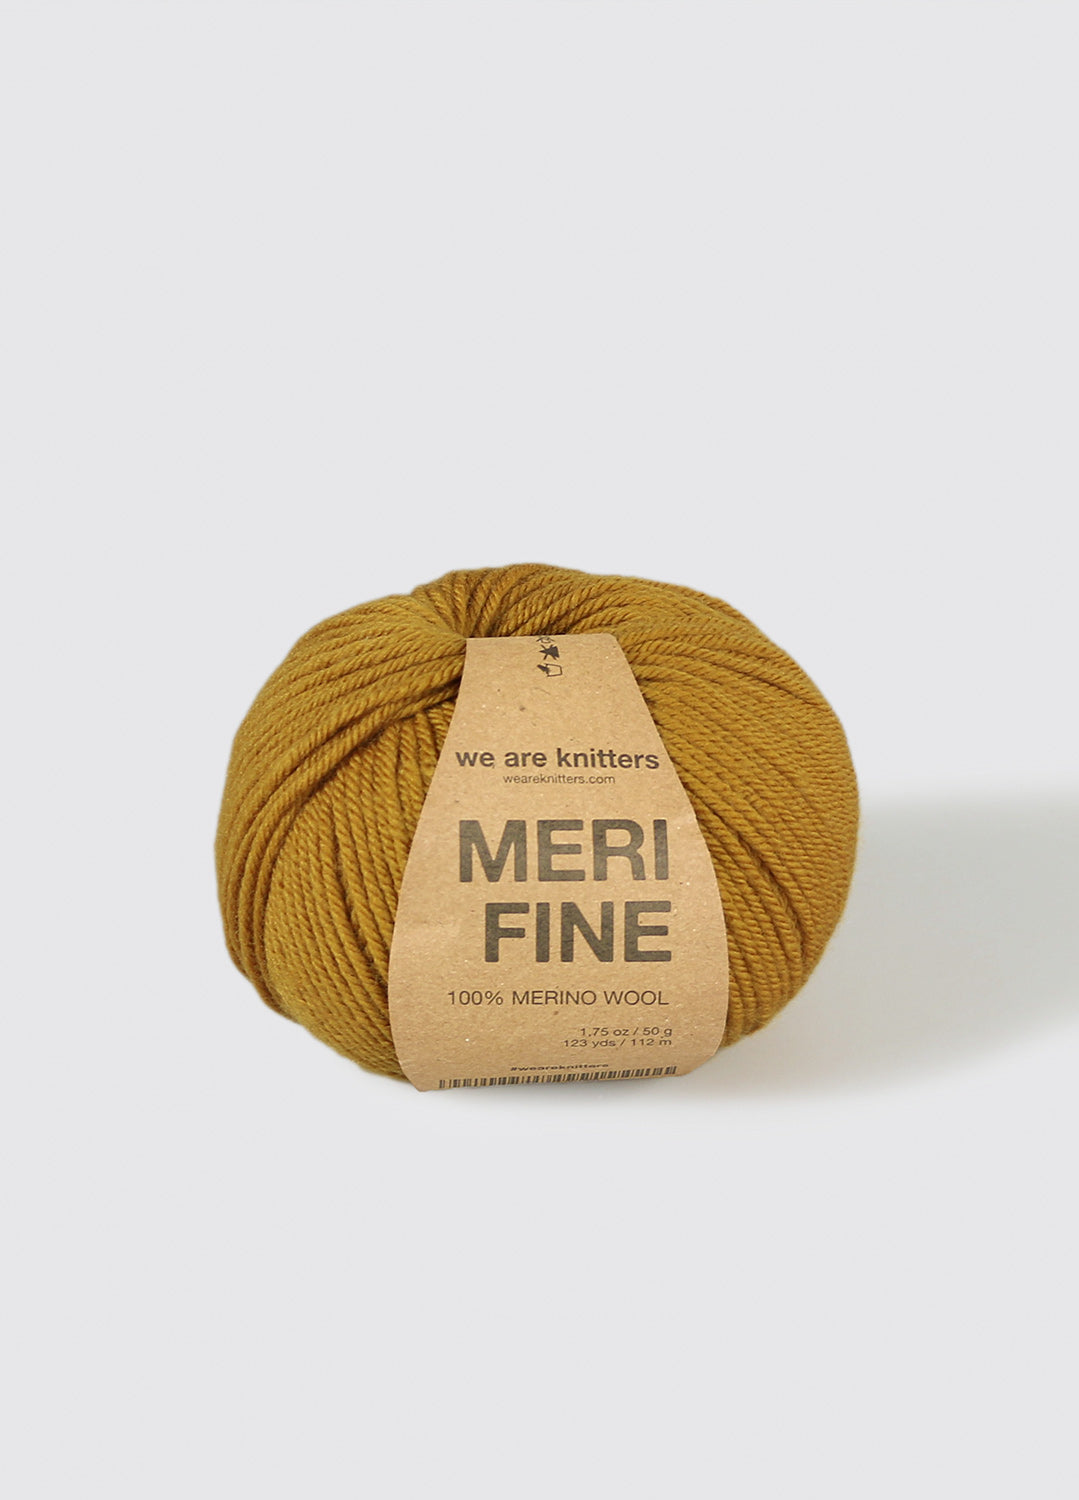 Merifine Ochre – We are knitters